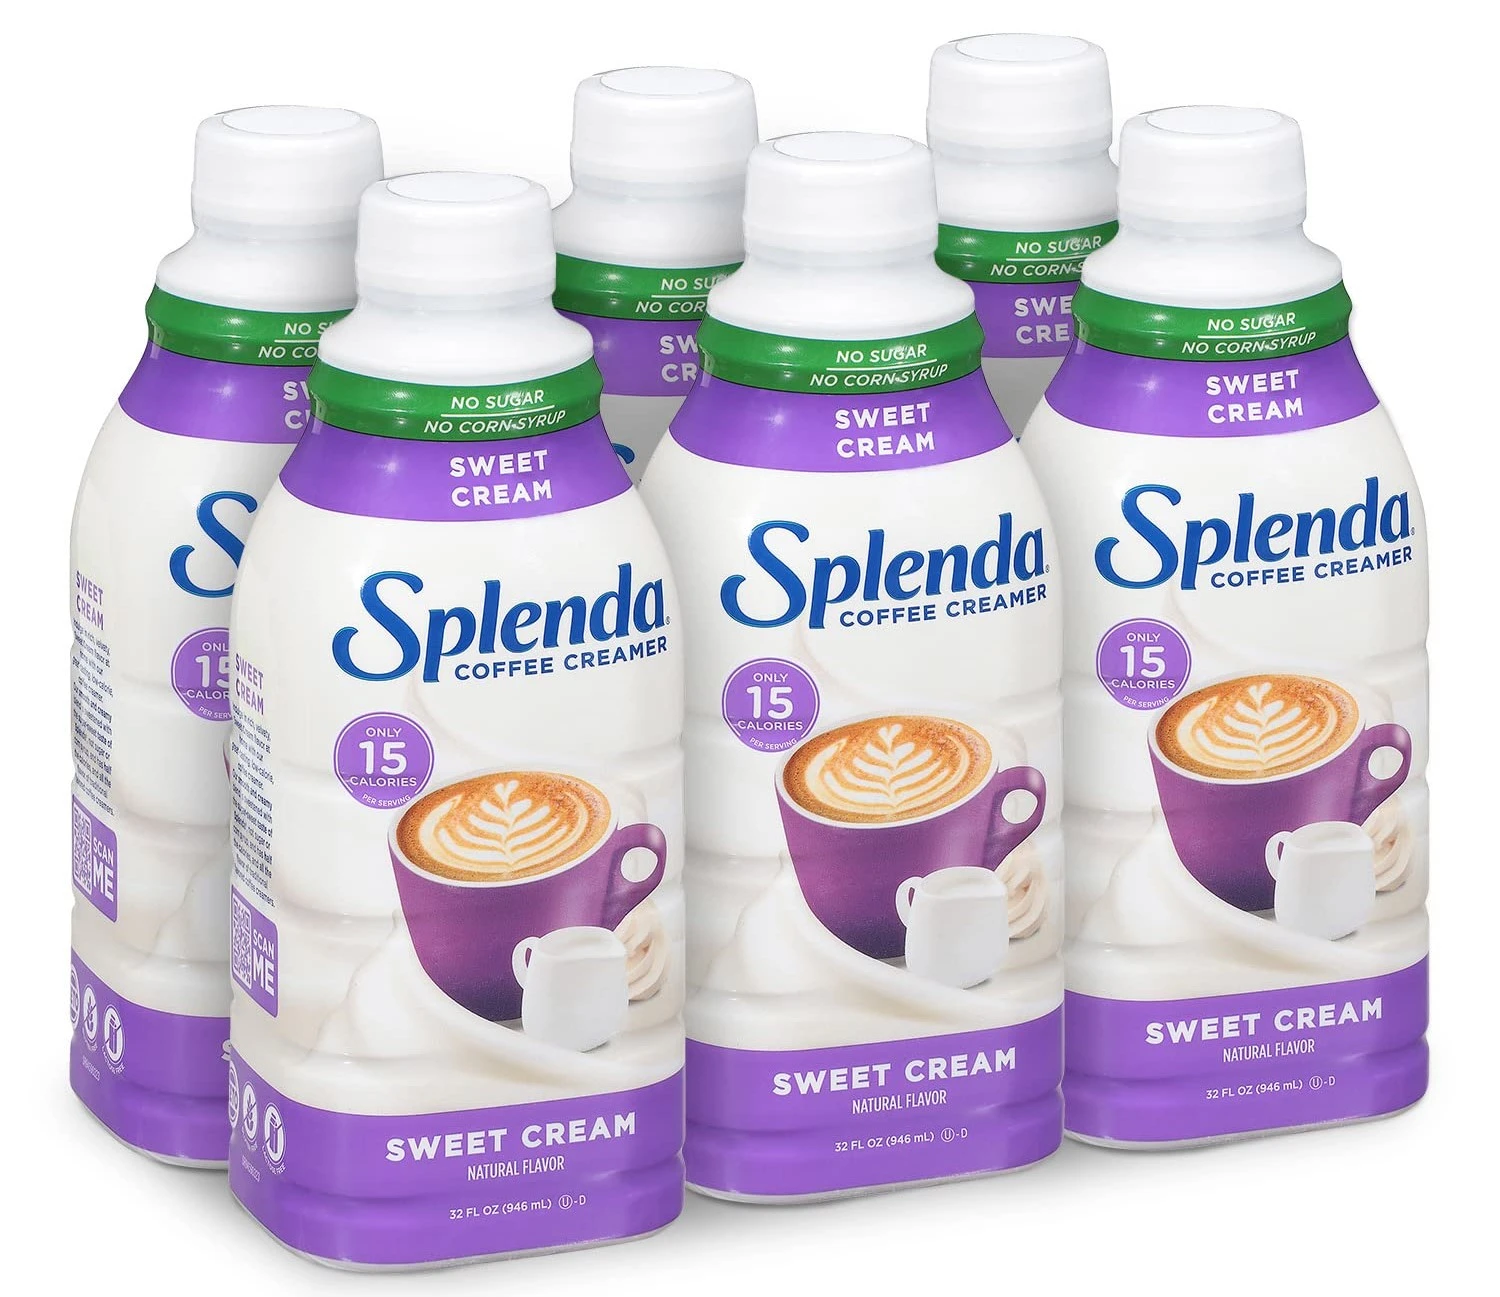 Splenda Sugar Free Low Calorie Coffee Creamer